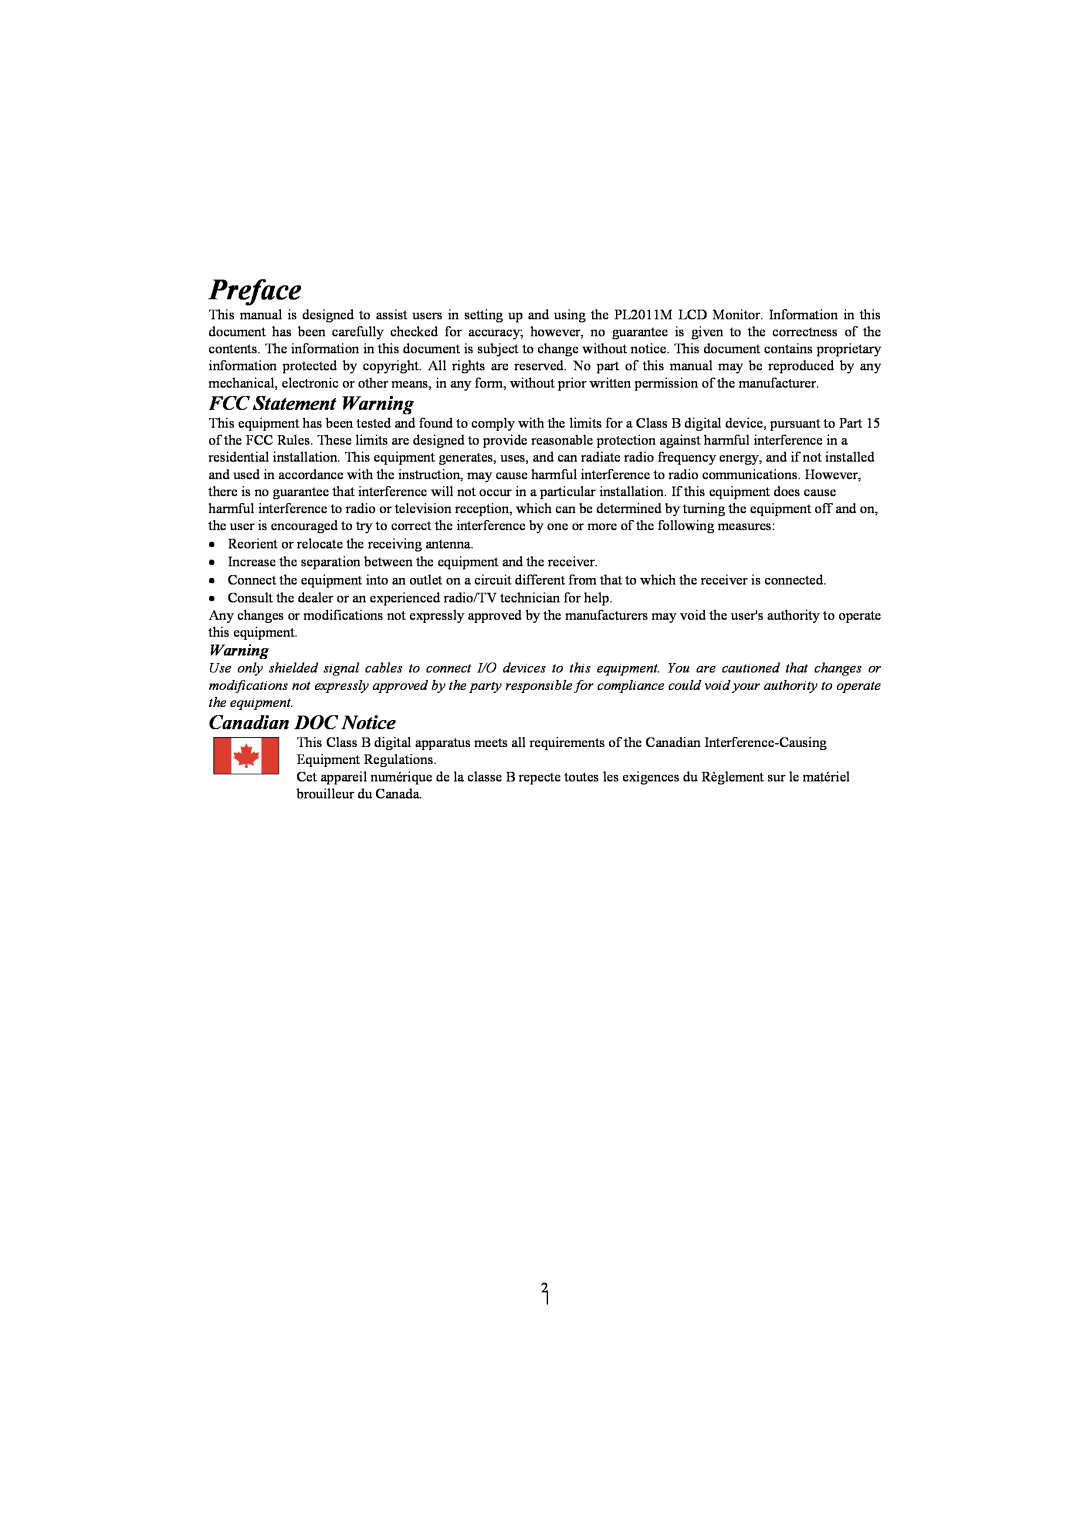 Planar PL2011M manual Preface, FCC Statement Warning, Canadian DOC Notice 